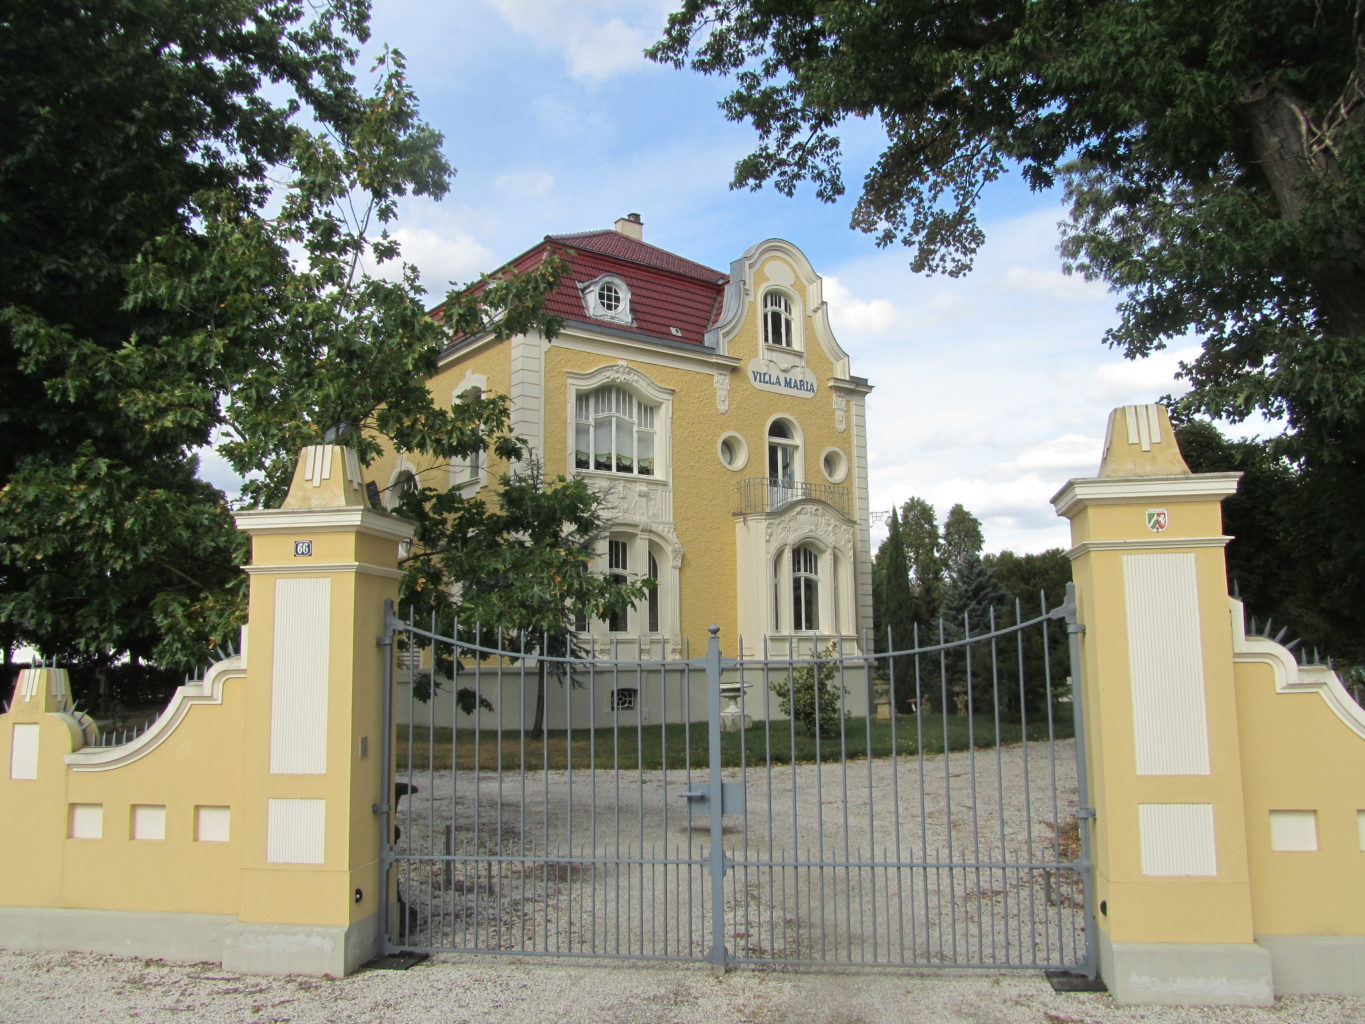 Villa Maria in Mariaweiler